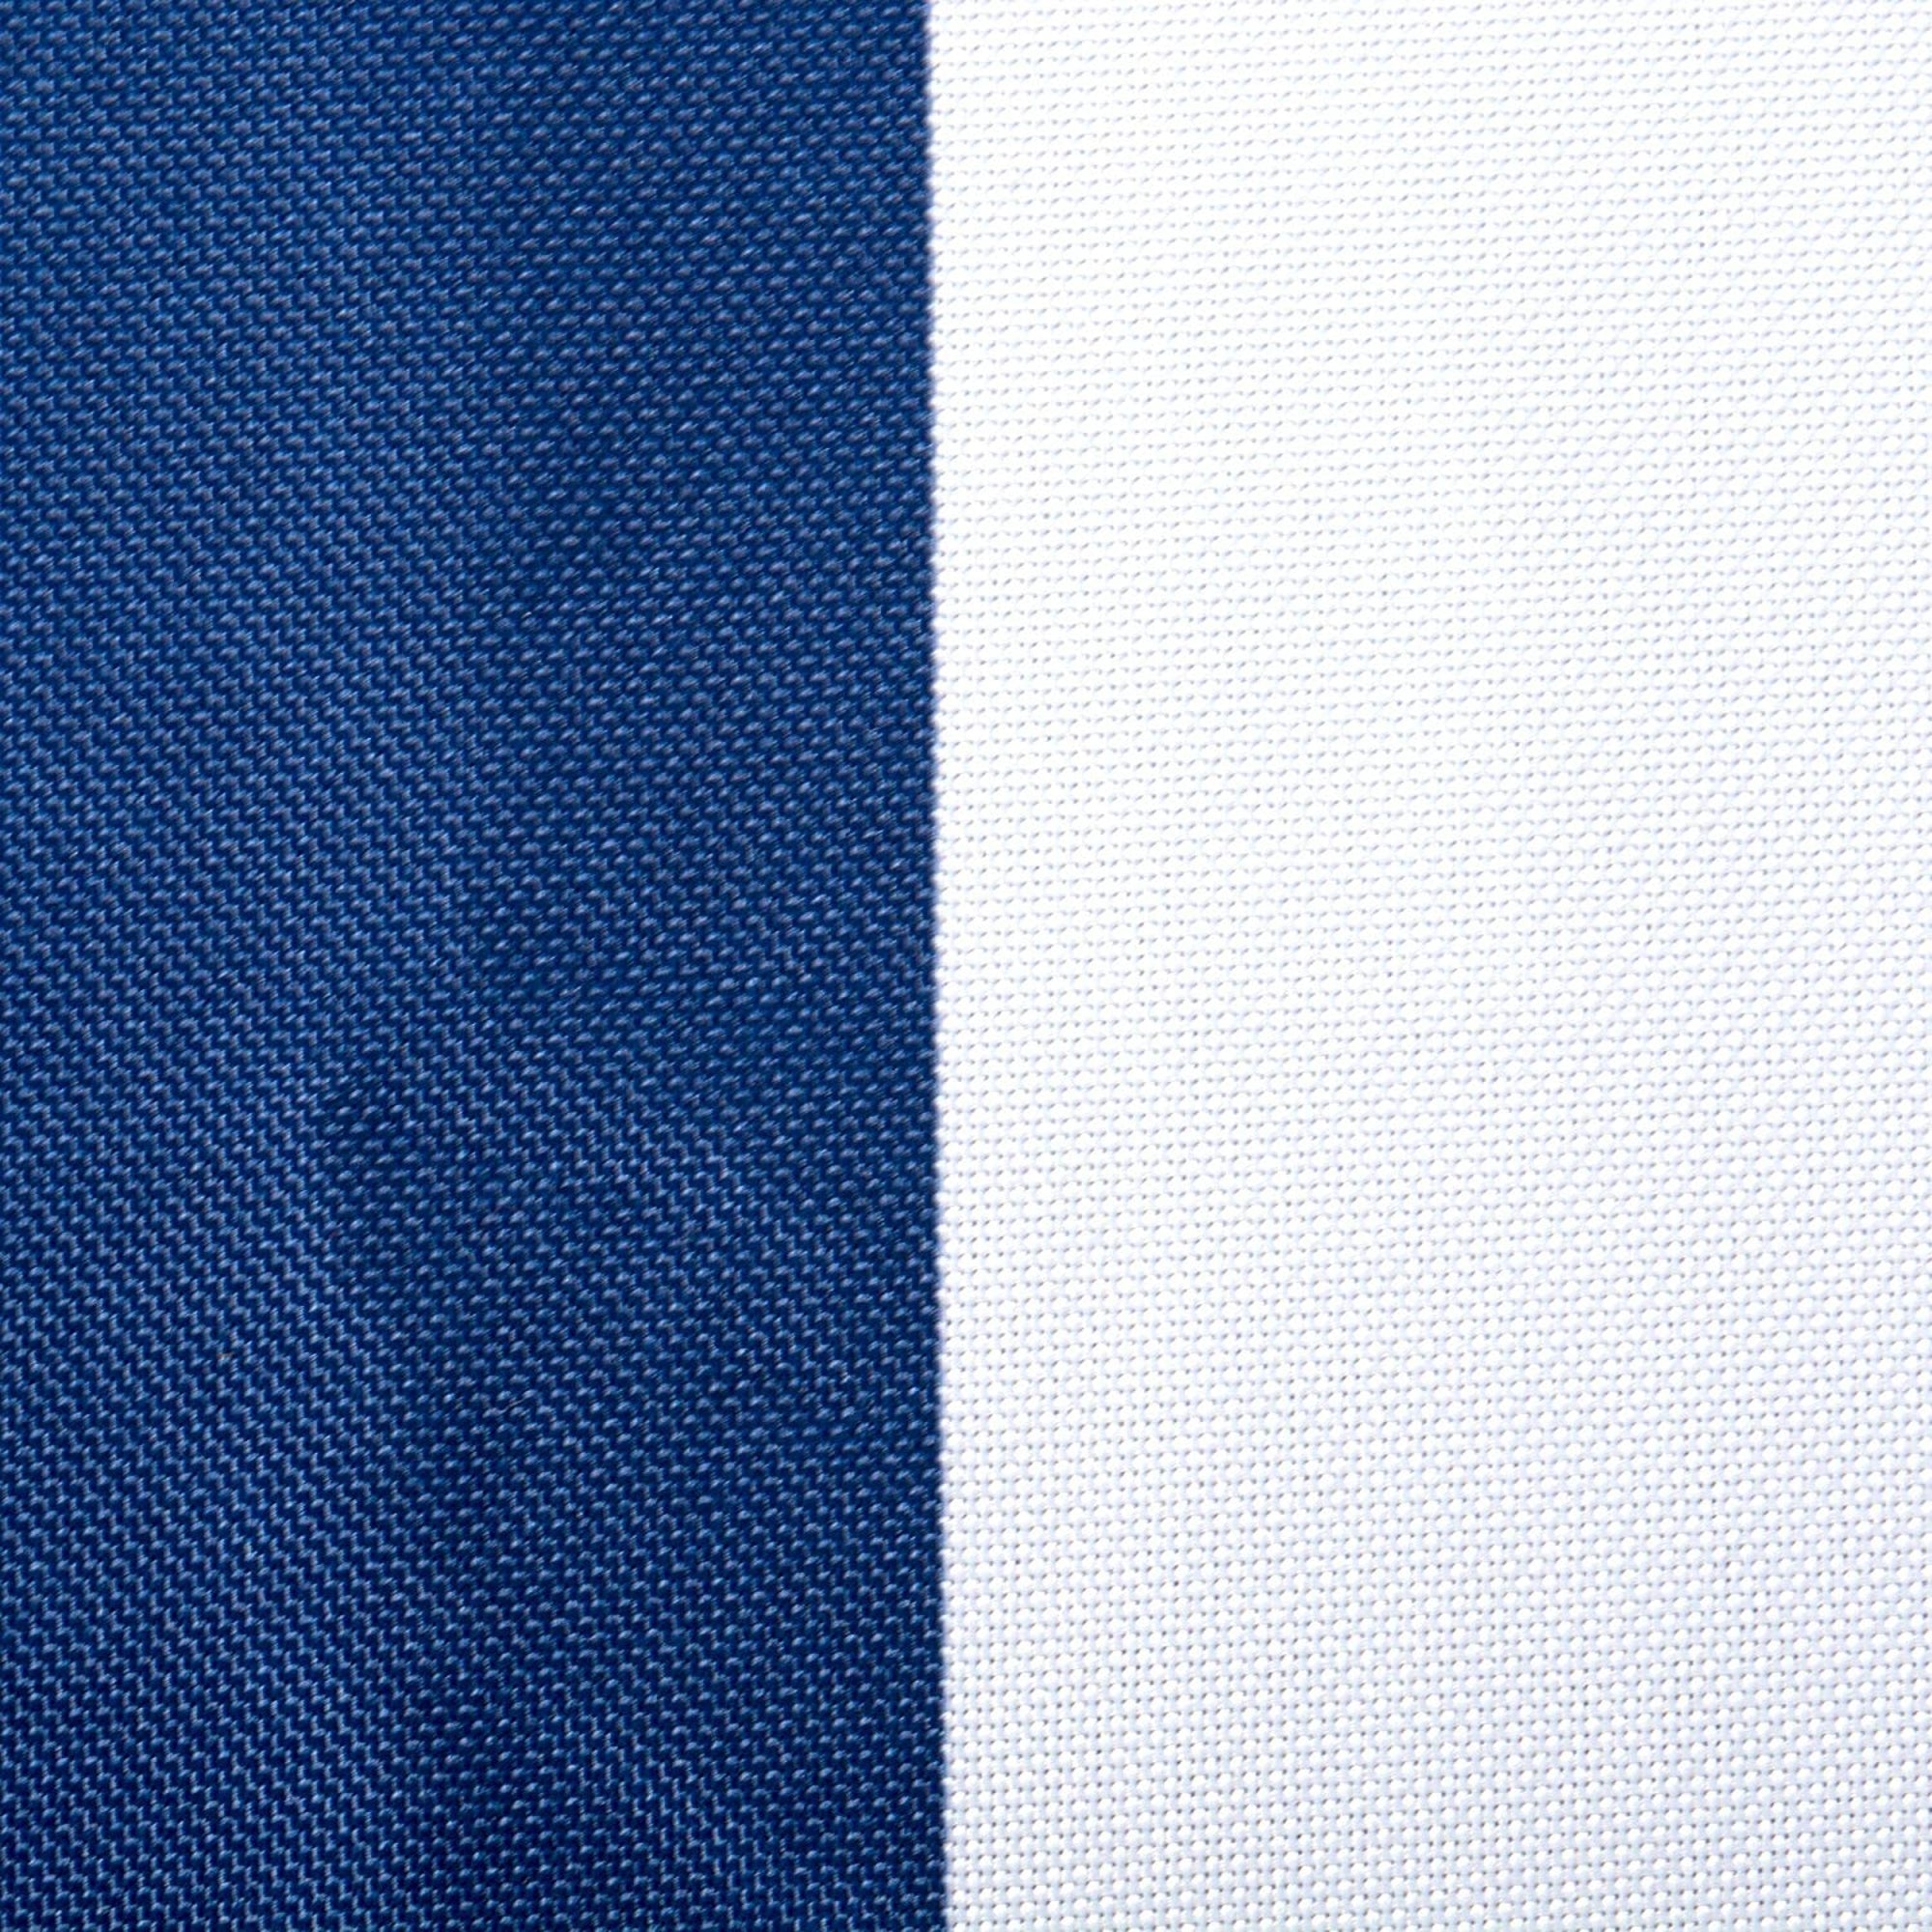 Nautical Blue Cabana Stripe Outdoor Tablecloth With Zipper 60x120 - Tablecloths